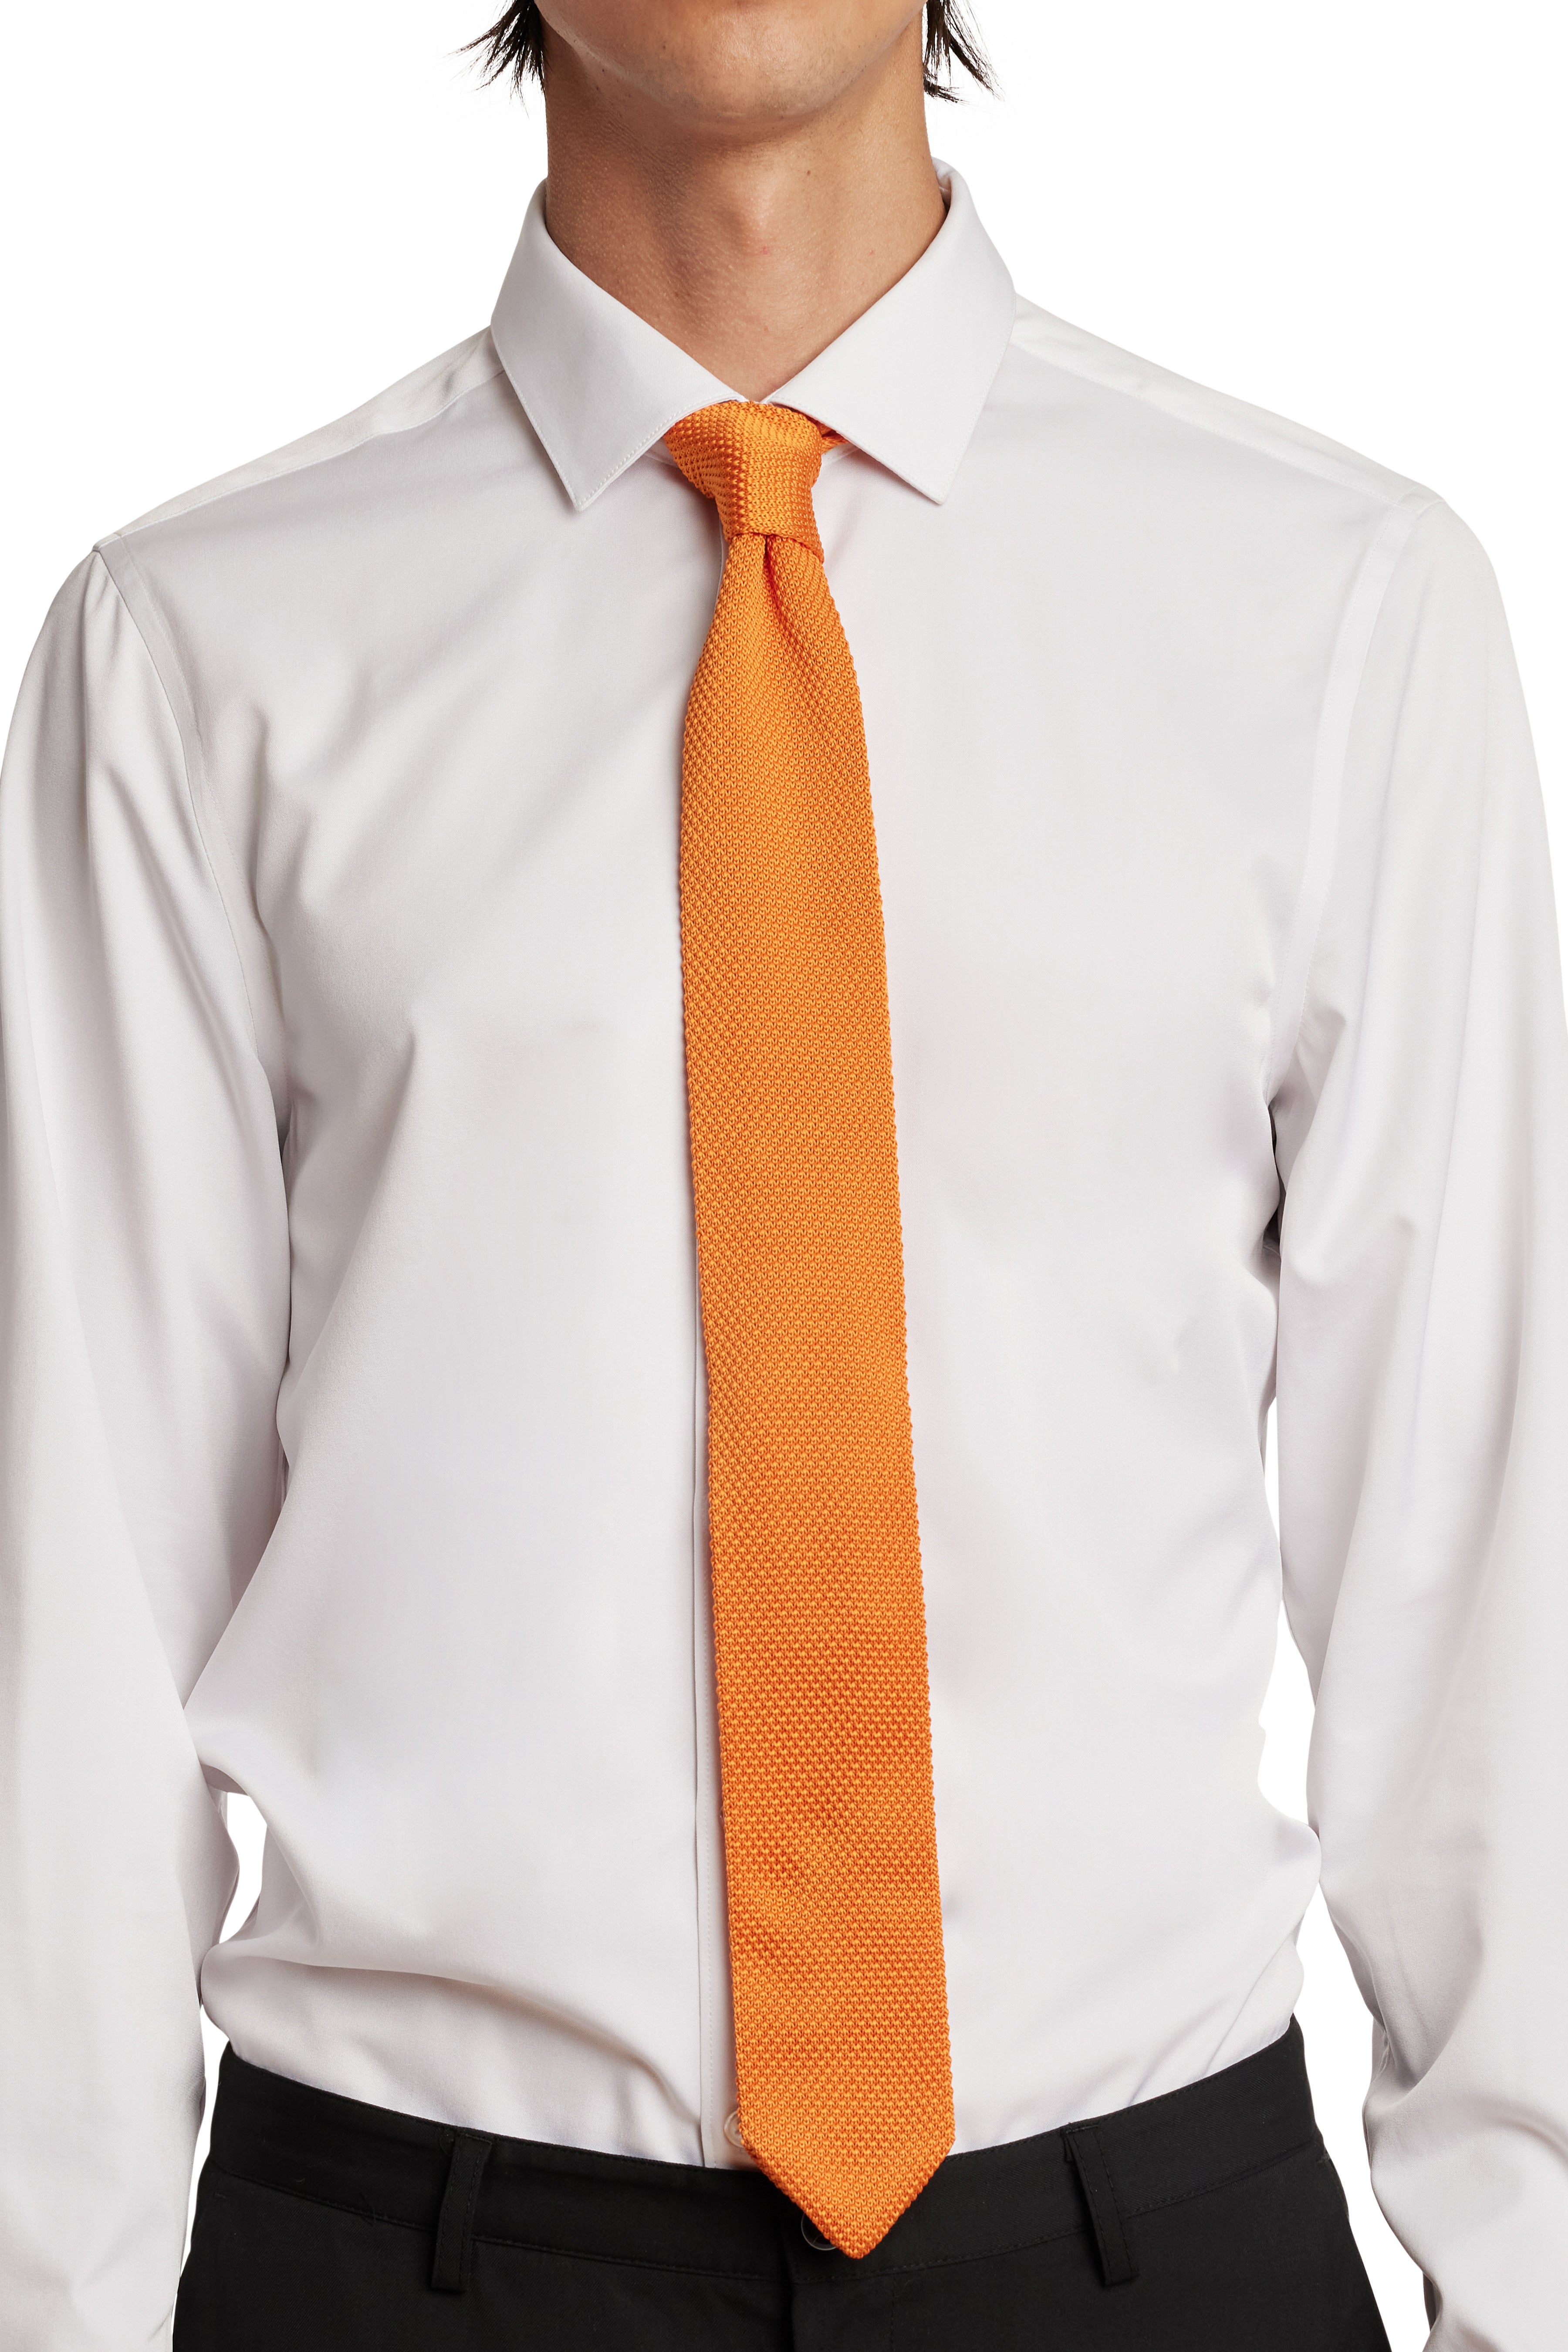 Stanley Knit Tie - Mandarin